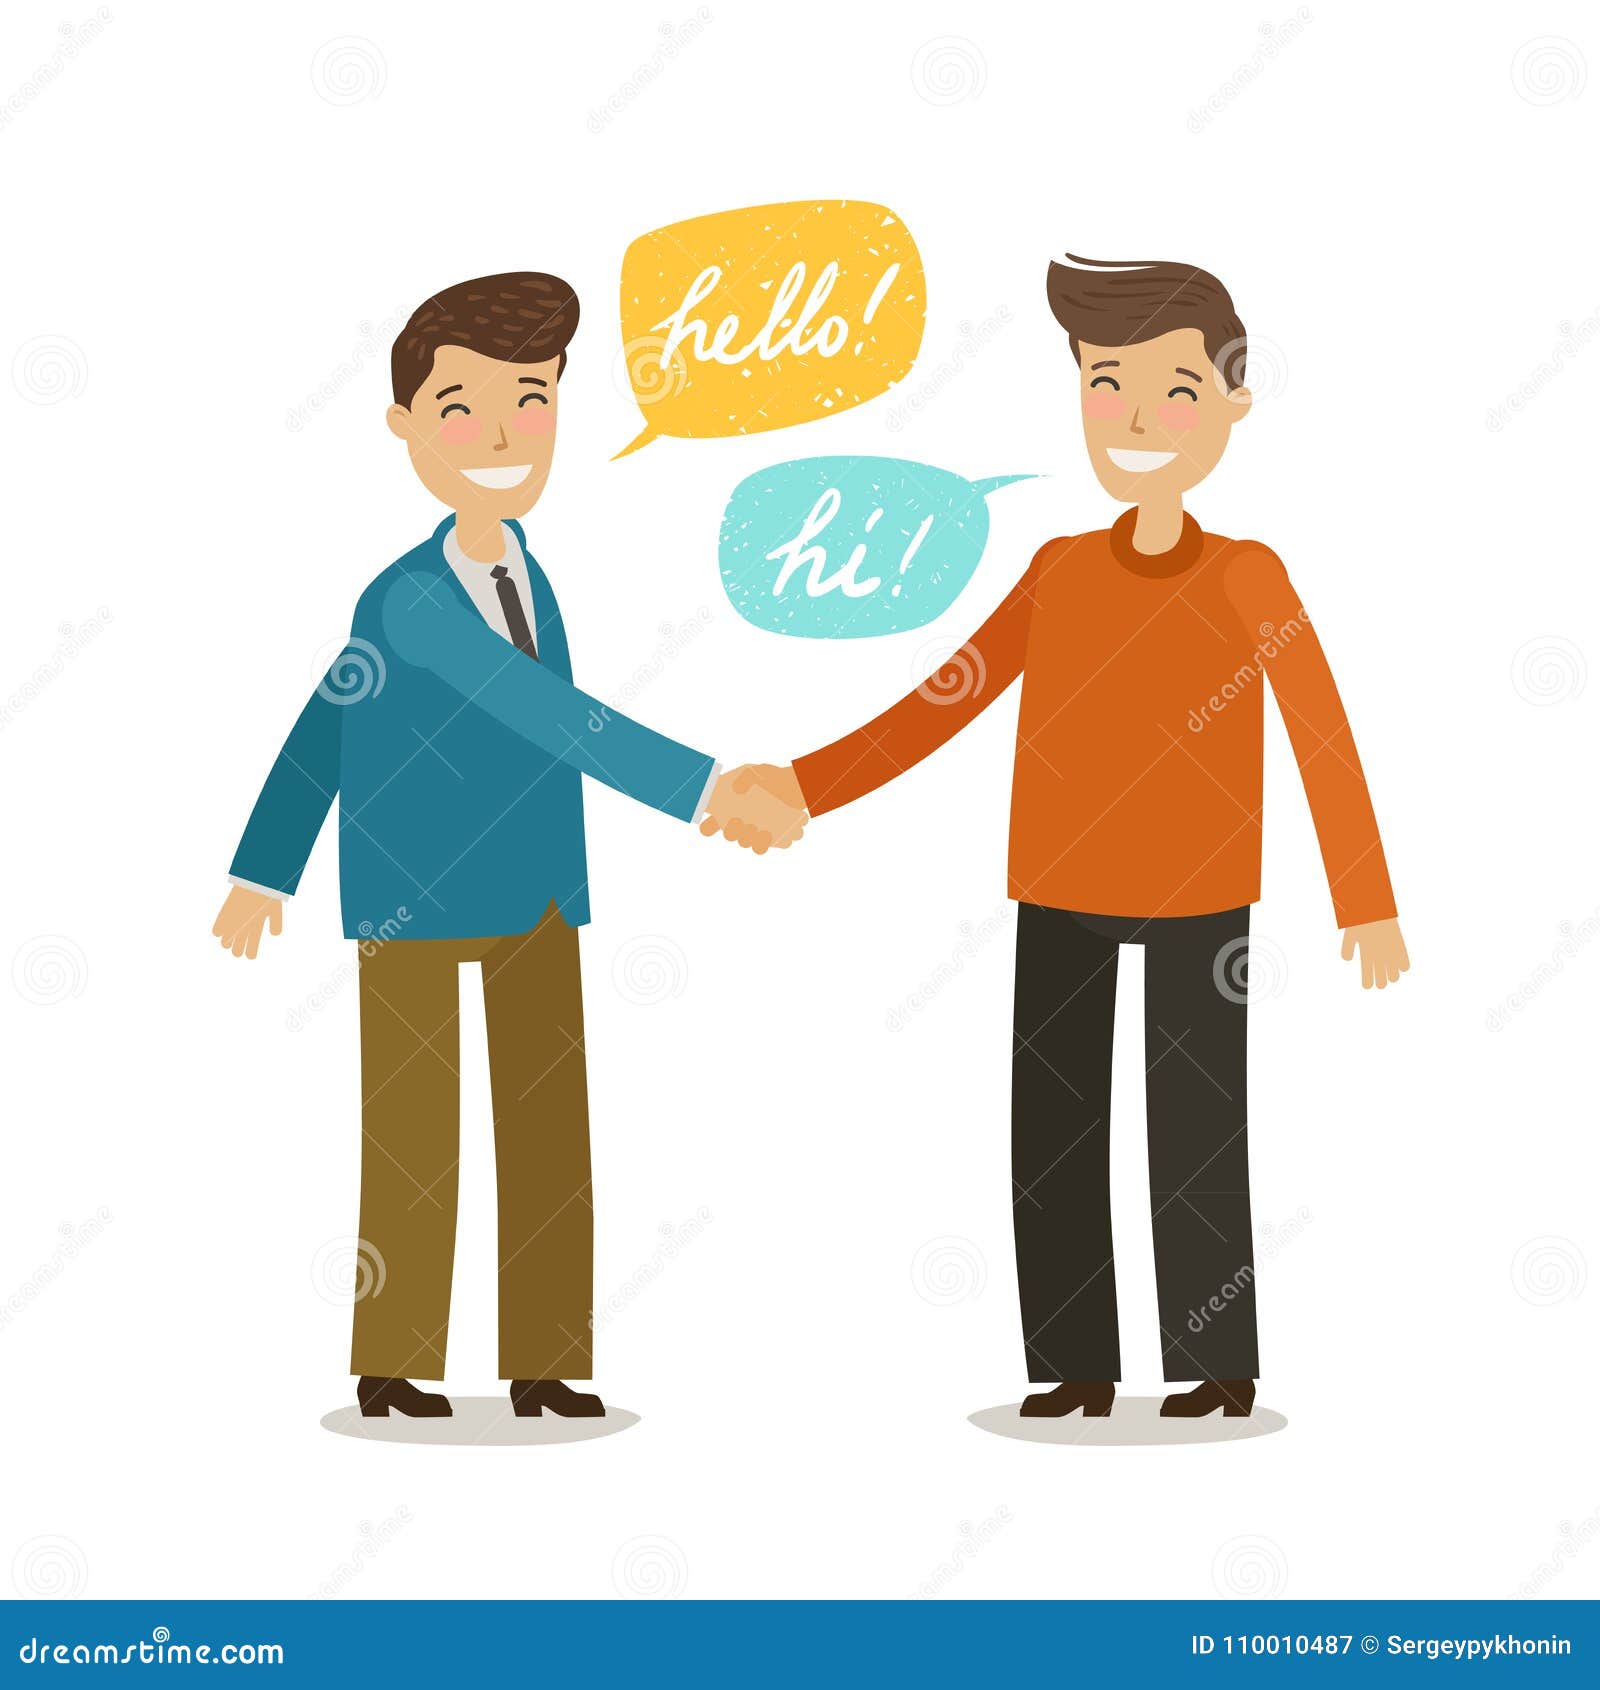 Handshake, Shaking Hands, Friendship Concept. Happy People Shake Hands in  Greeting. Cartoon Vector Illustration in Flat Stock Vector - Illustration  of assistance, happy: 110010487